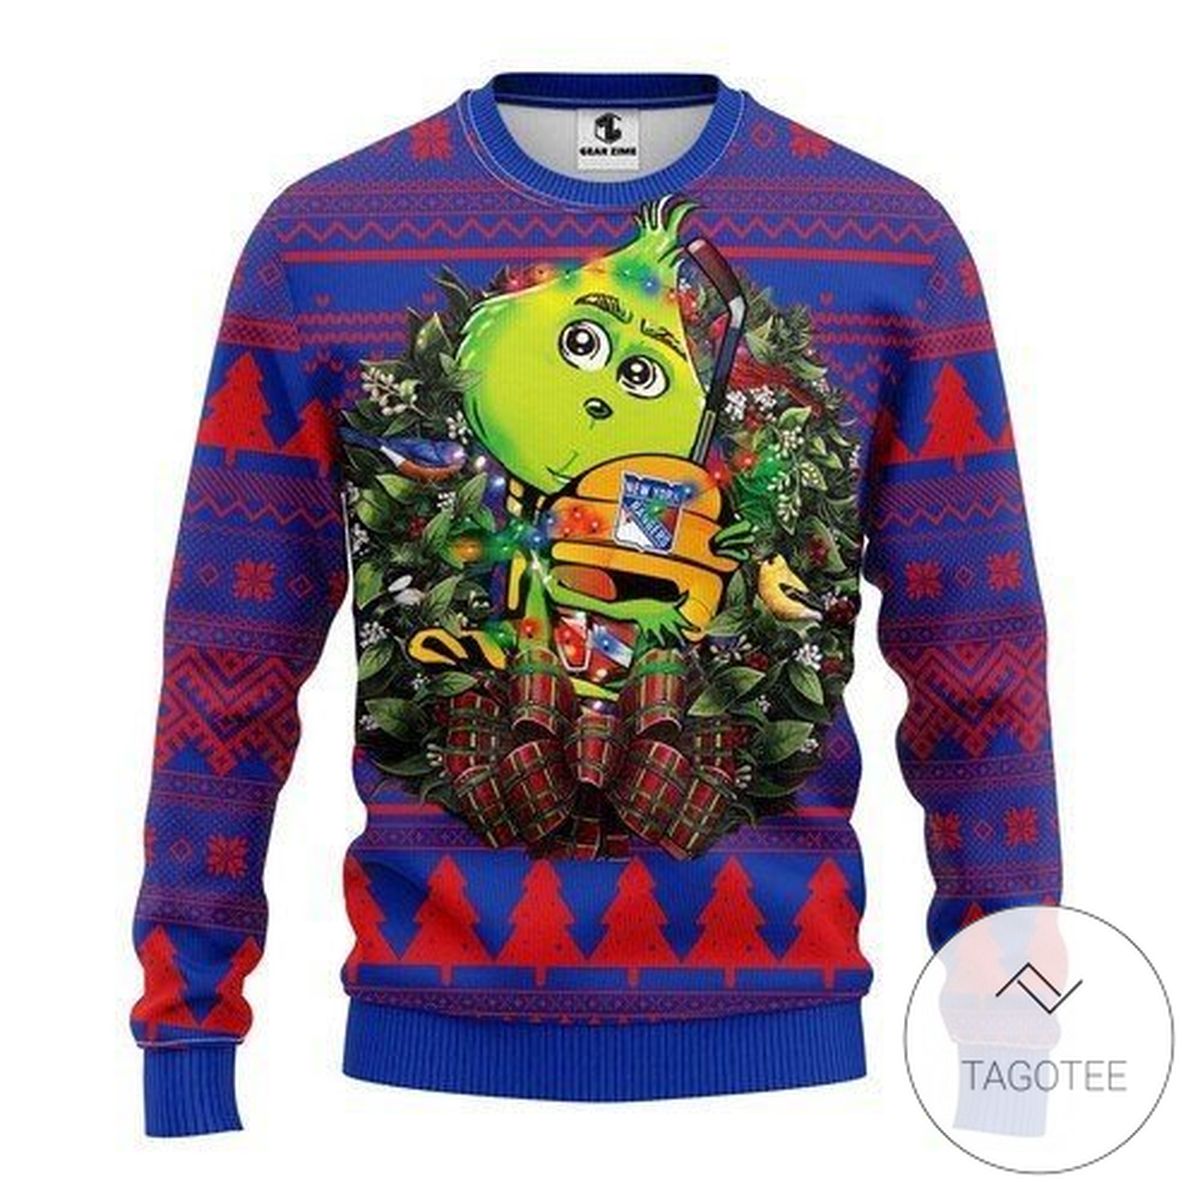 New York Rangers Grinch Hug Sweatshirt Knitted Ugly Christmas Sweater